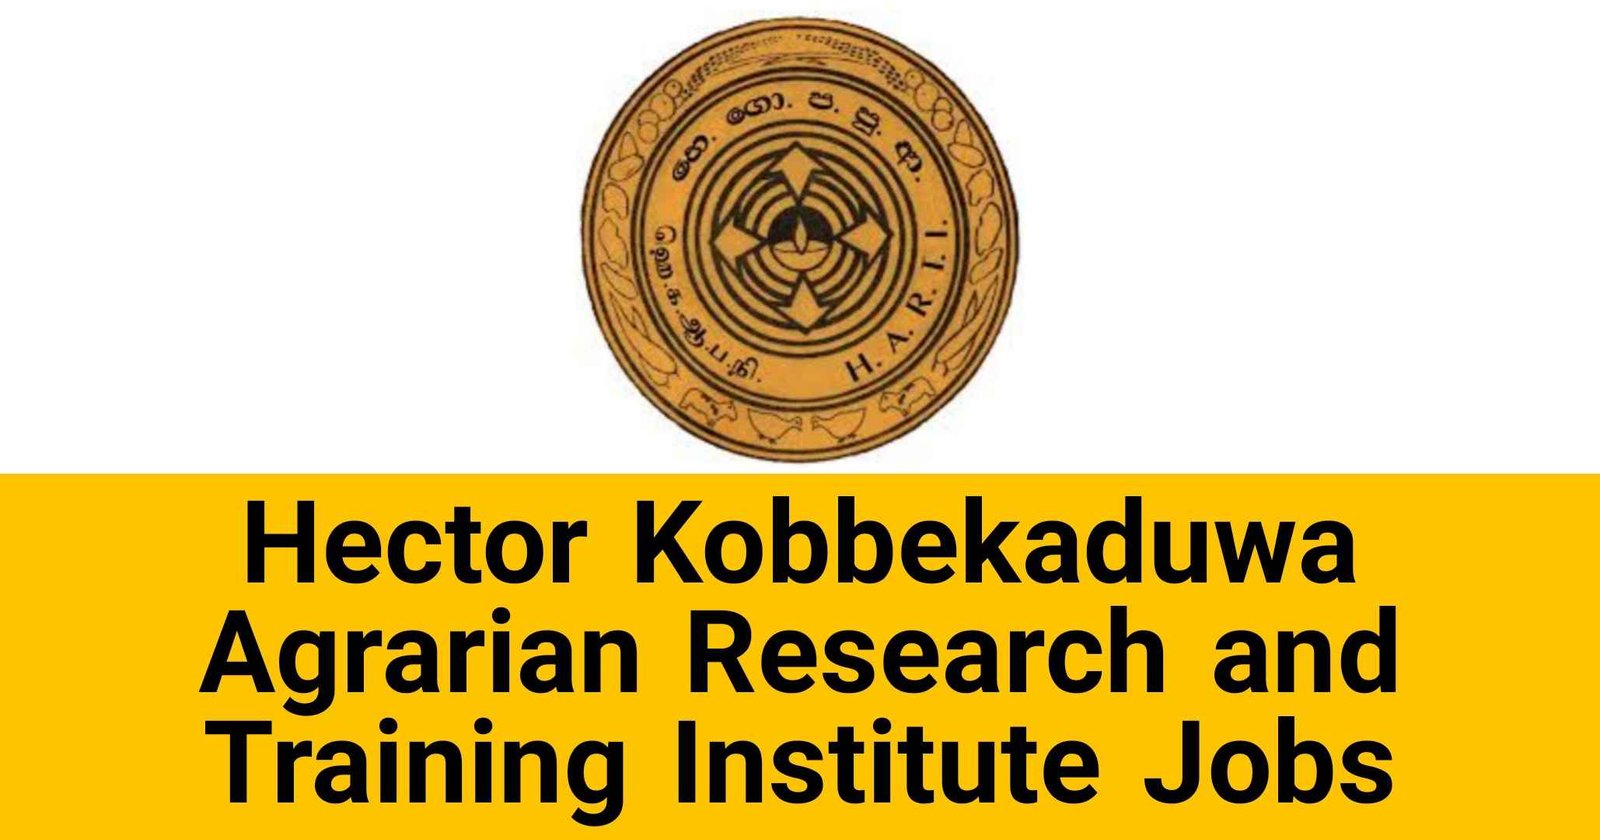 Hector Kobbekaduwa Agrarian Research and Training Institute Jobs Vacancies Careers